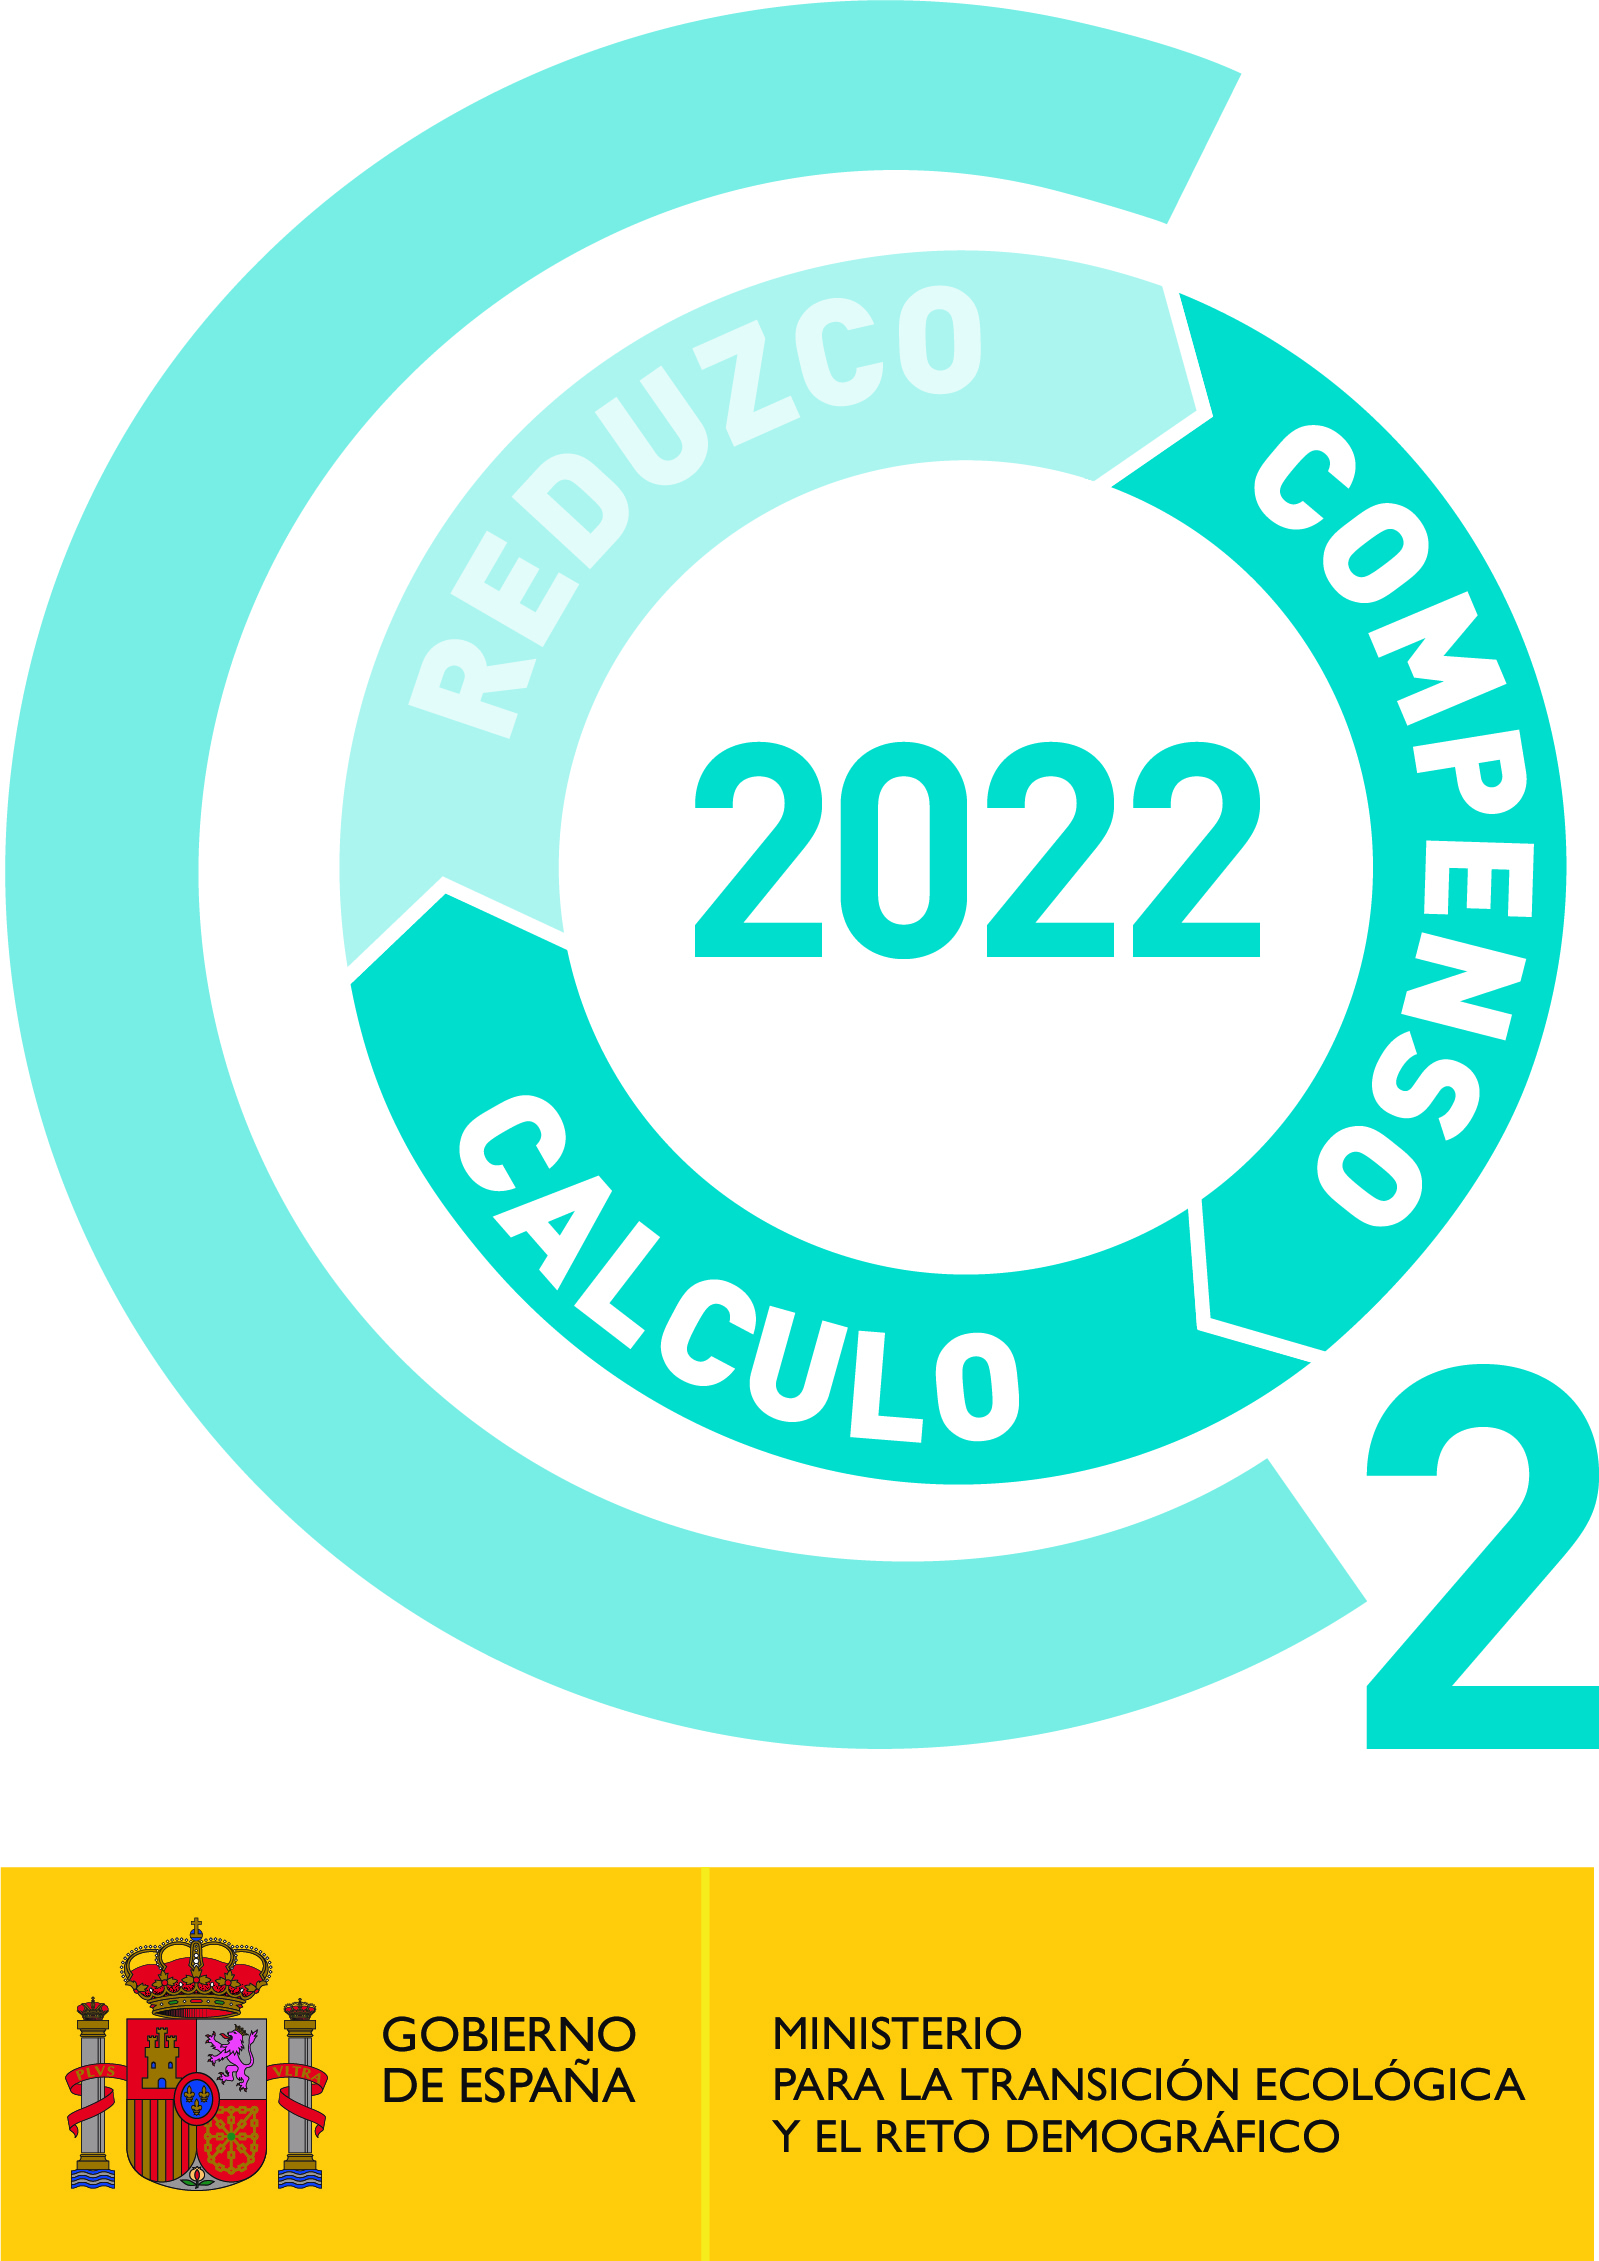 "Calculation + Compensation" 2022 seal